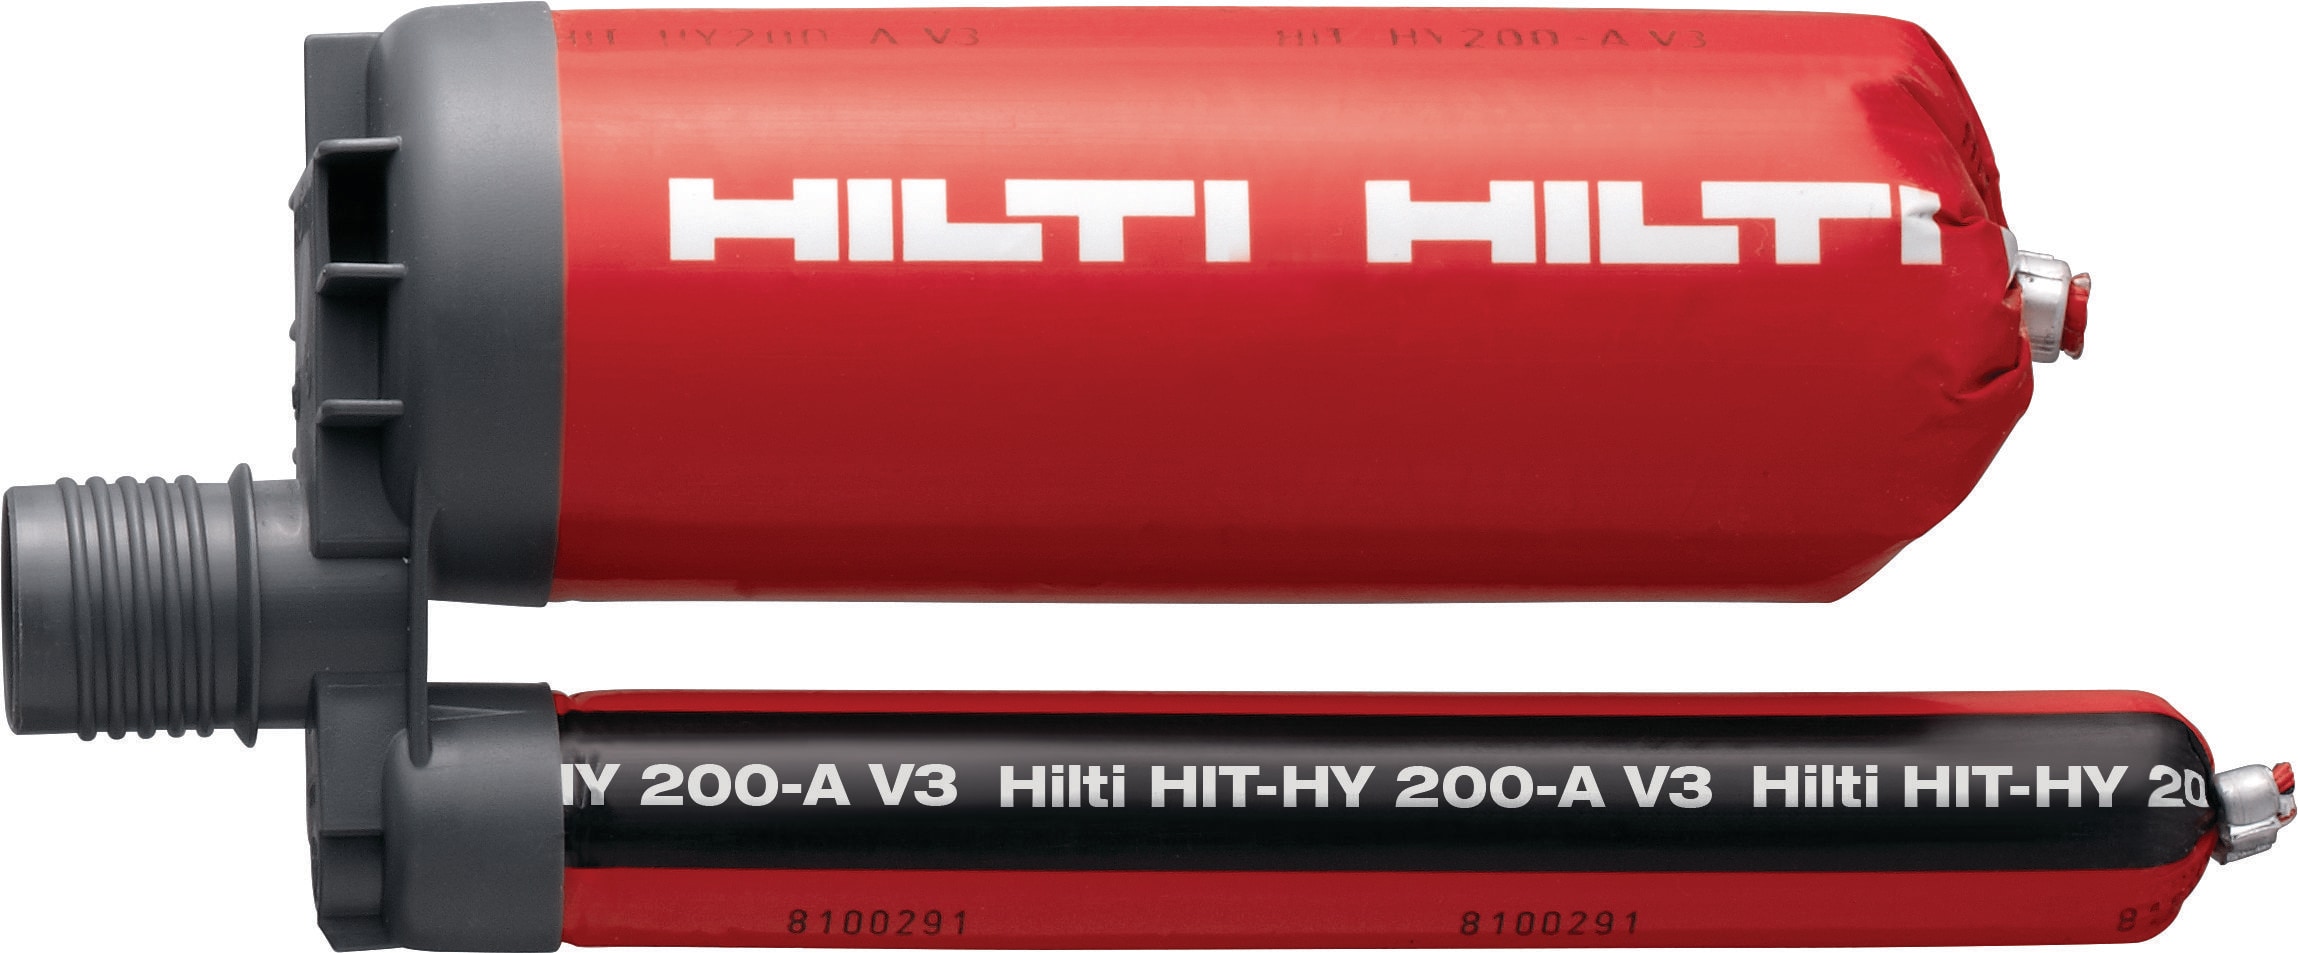 HIT-HY 200-A V3 Adhesive anchor - Chemical Anchors - Hilti Canada